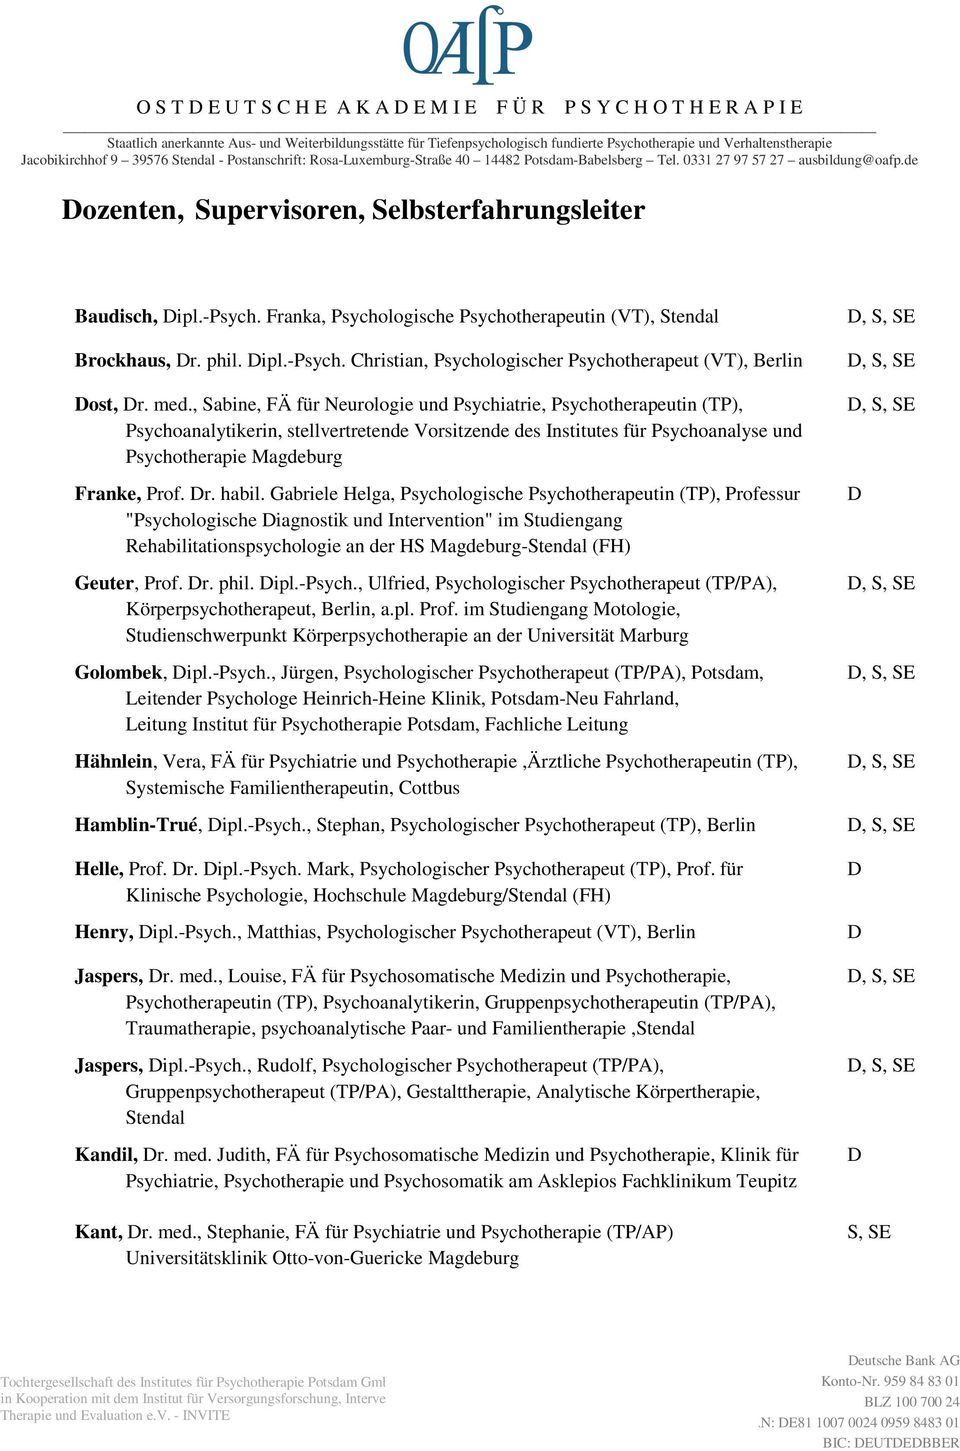 -psych. Franka, Psychologische Psychotherapeutin (VT), Stendal Brockhaus, r. phil. ipl.-psych. Christian, Psychologischer Psychotherapeut (VT), Berlin ost, r. med.